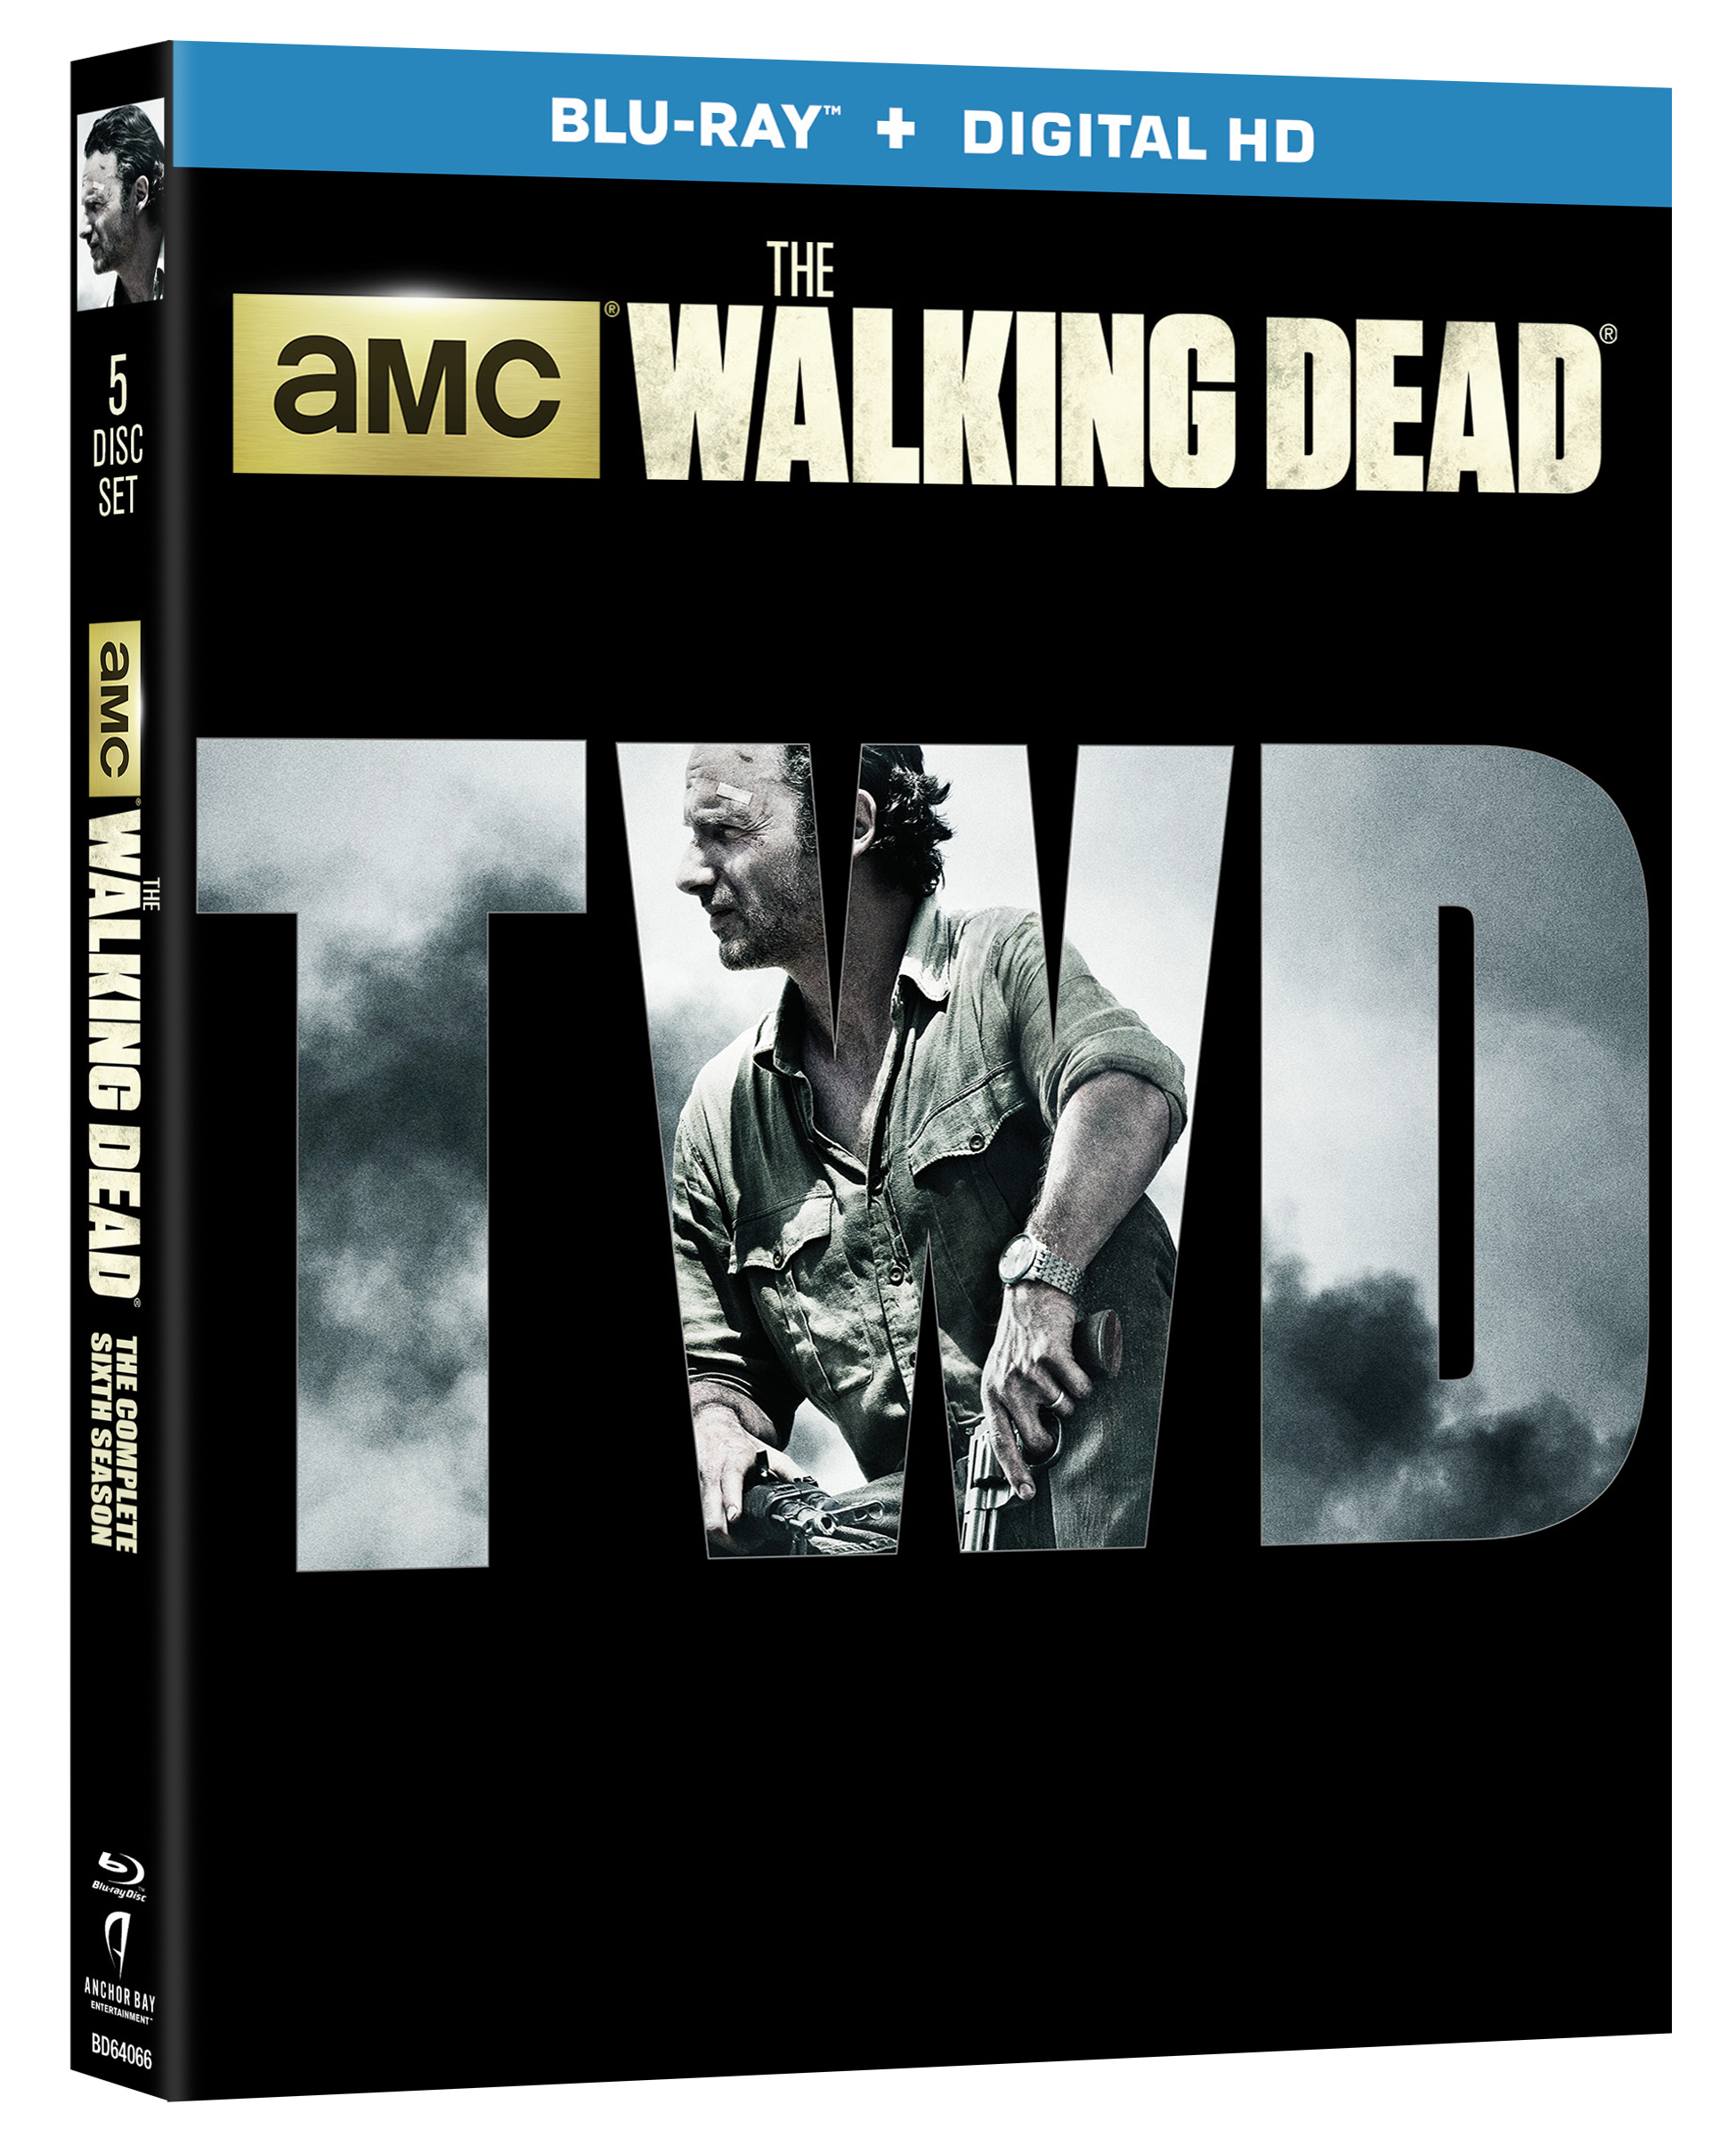 The Walking Dead Season 6 Blu-ray Cover